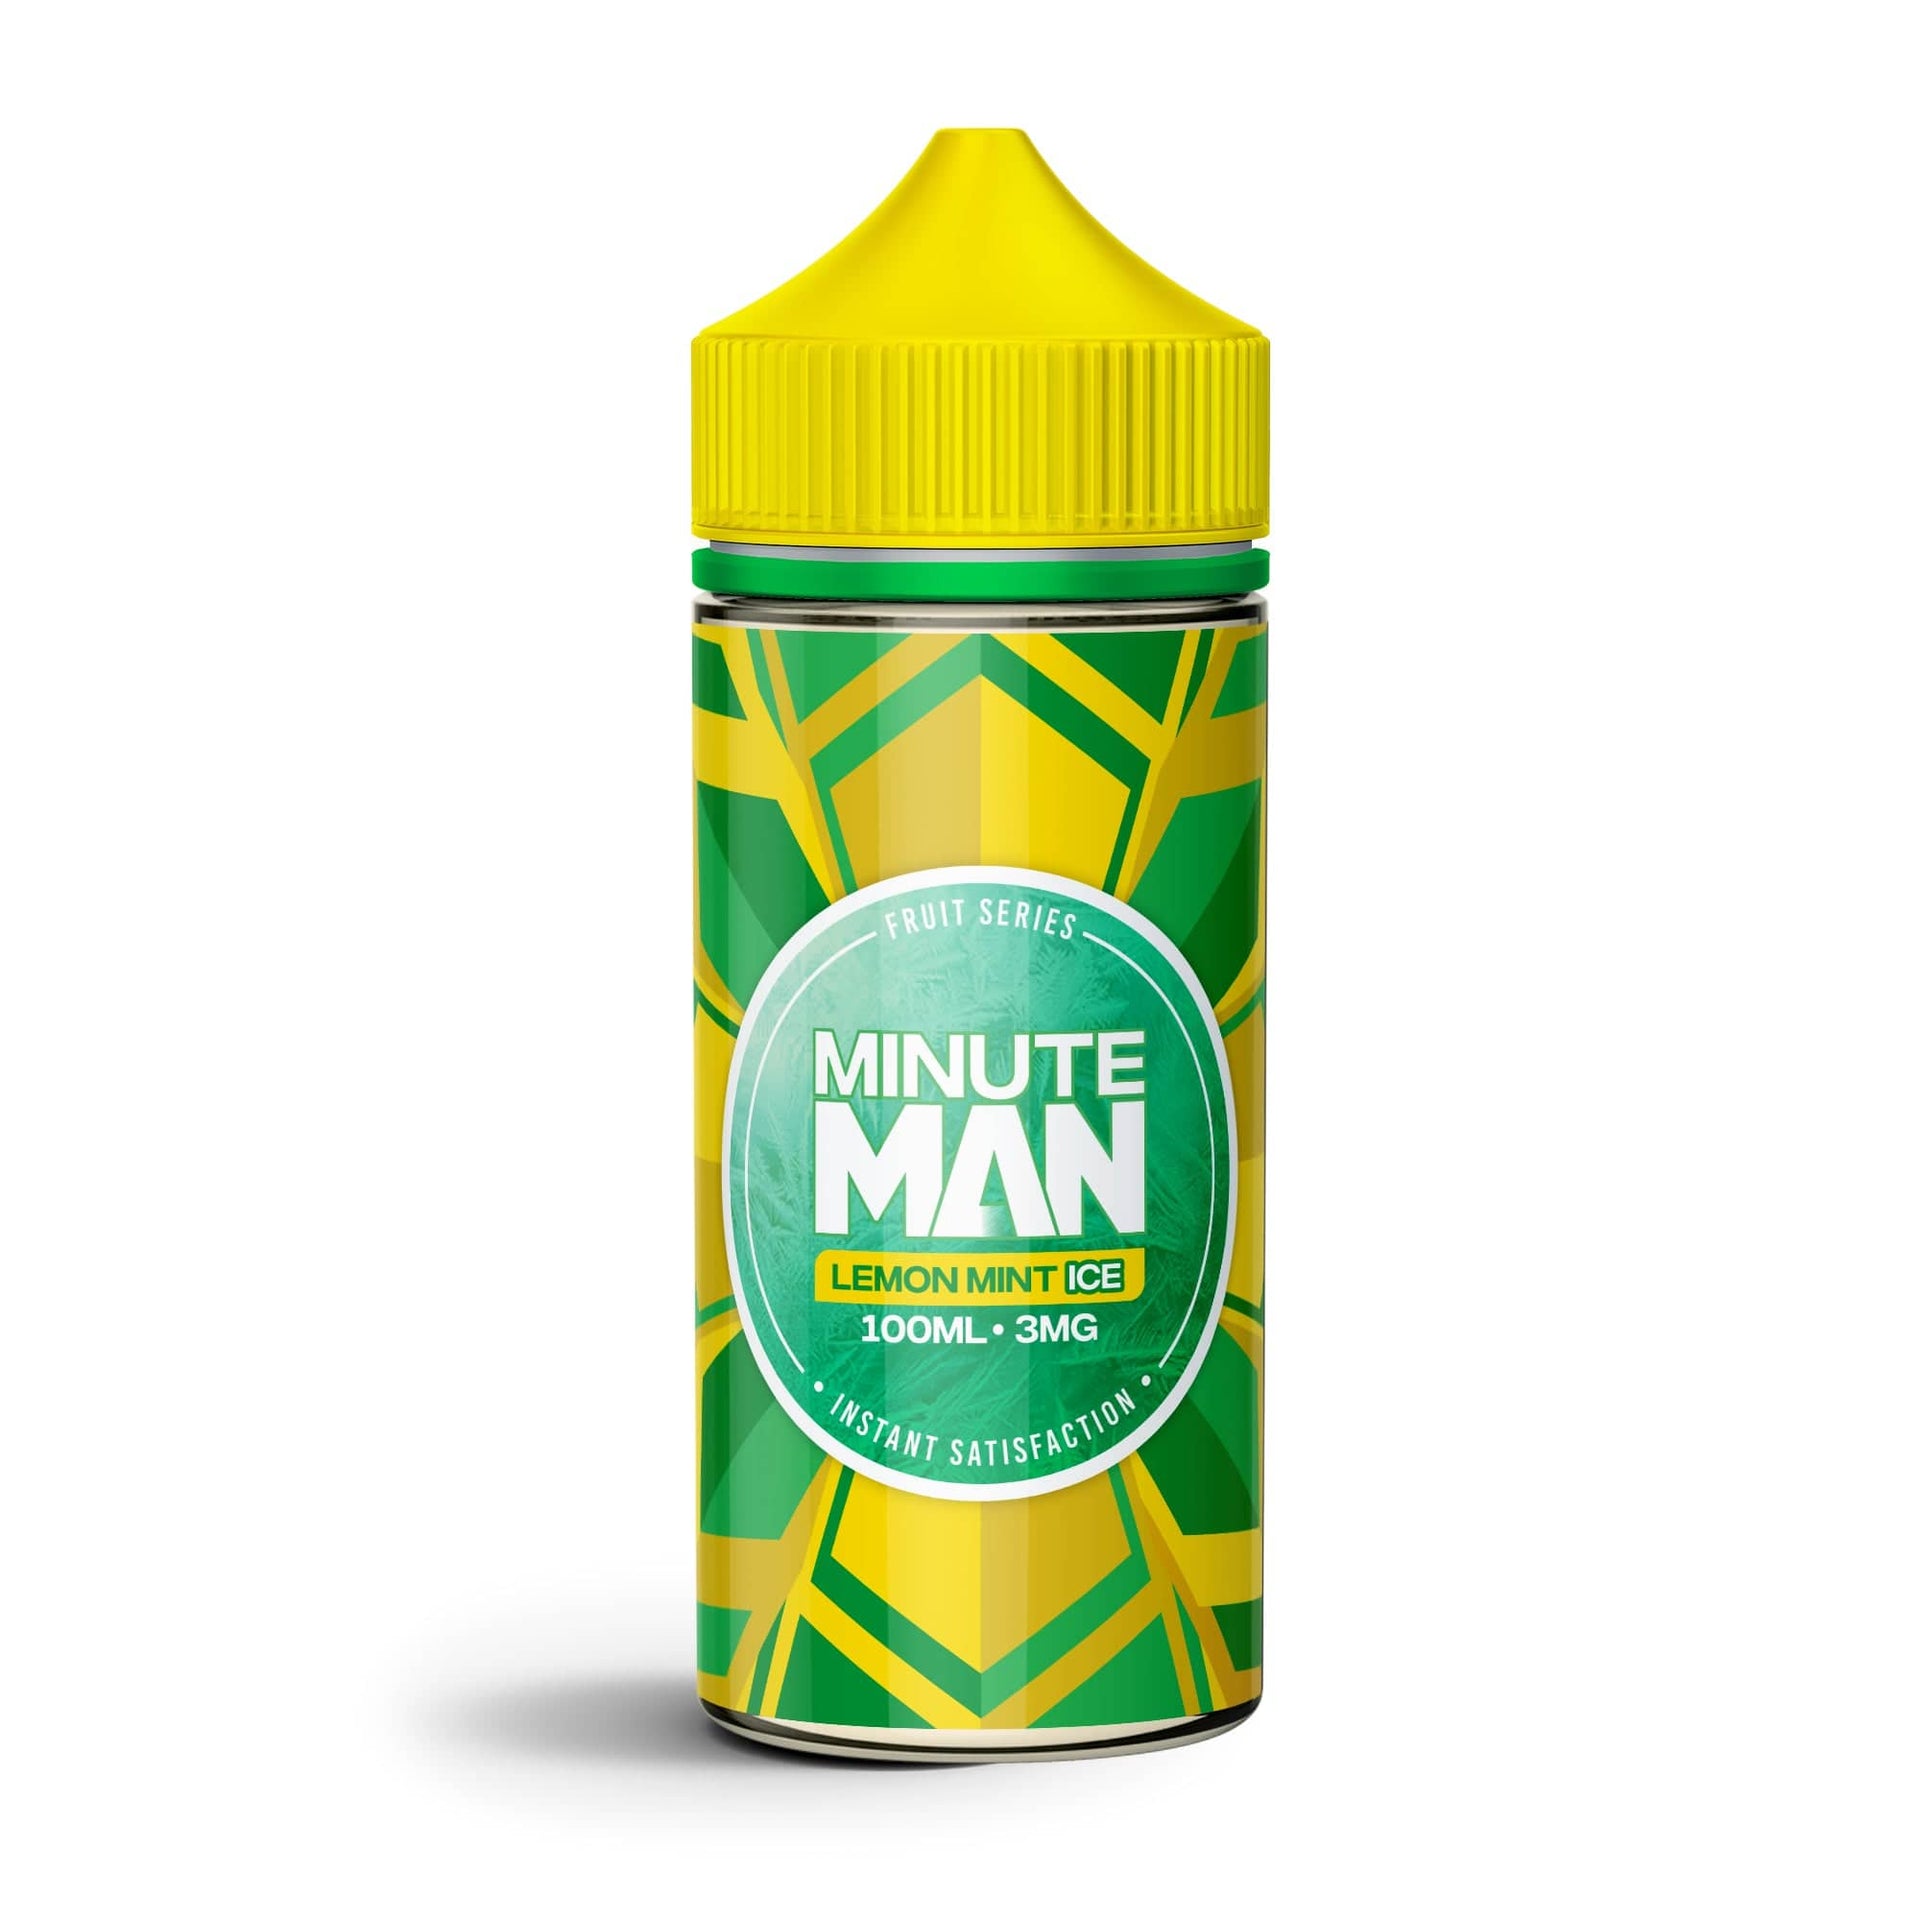 Minute Man Lemon Mint Ice 100ml Vape Juice